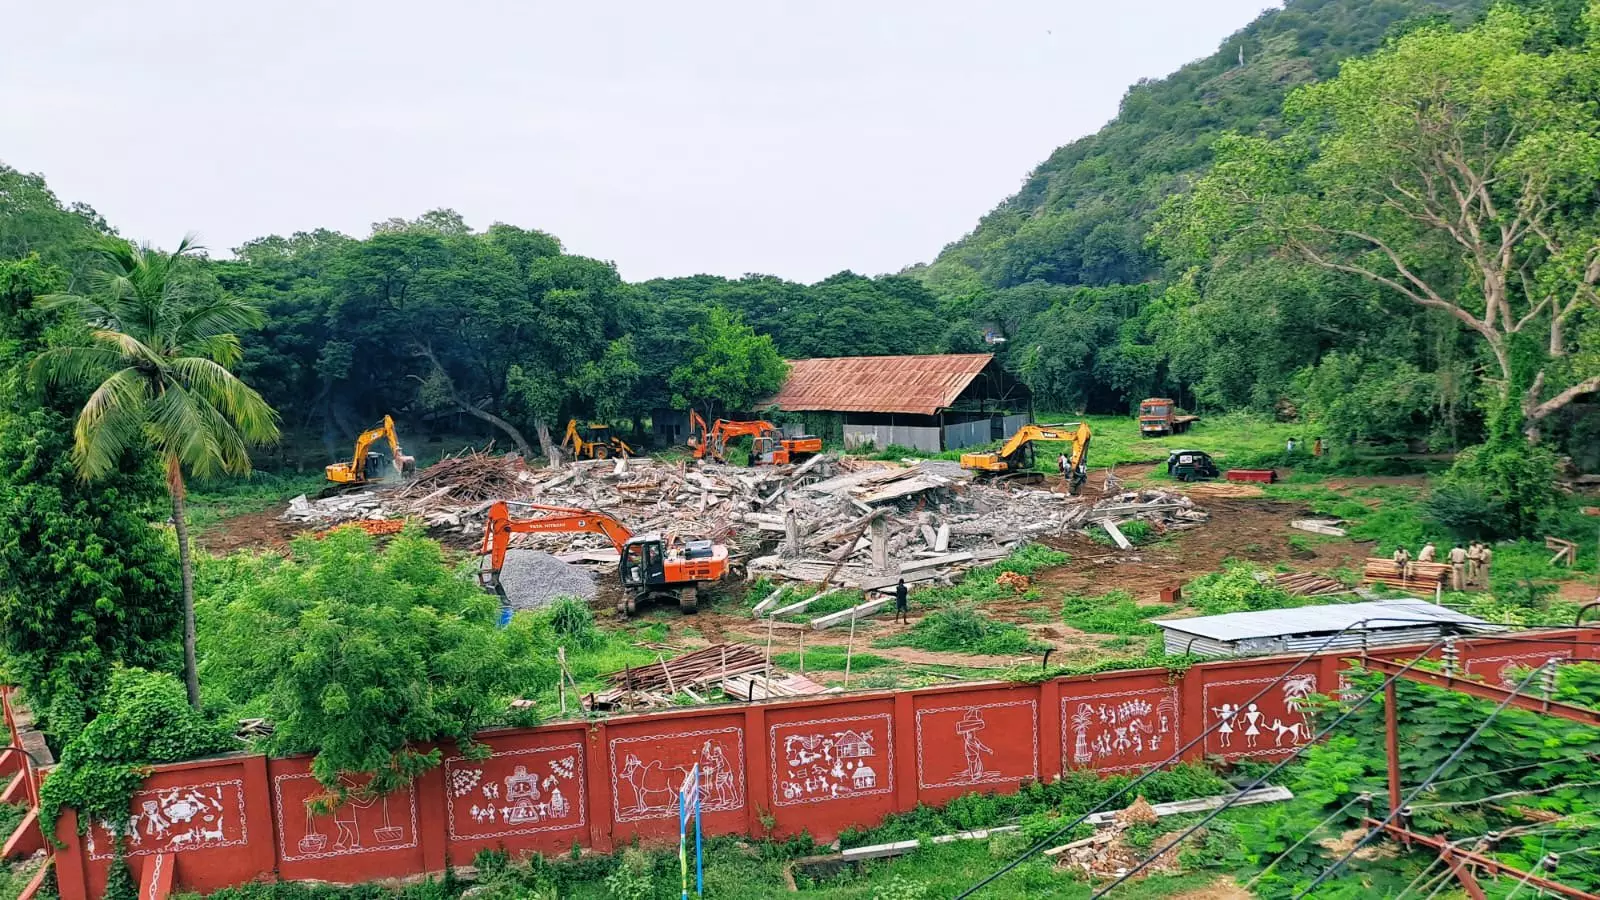 YSRCs under construction central office demolished disregarding court orders: Jagan